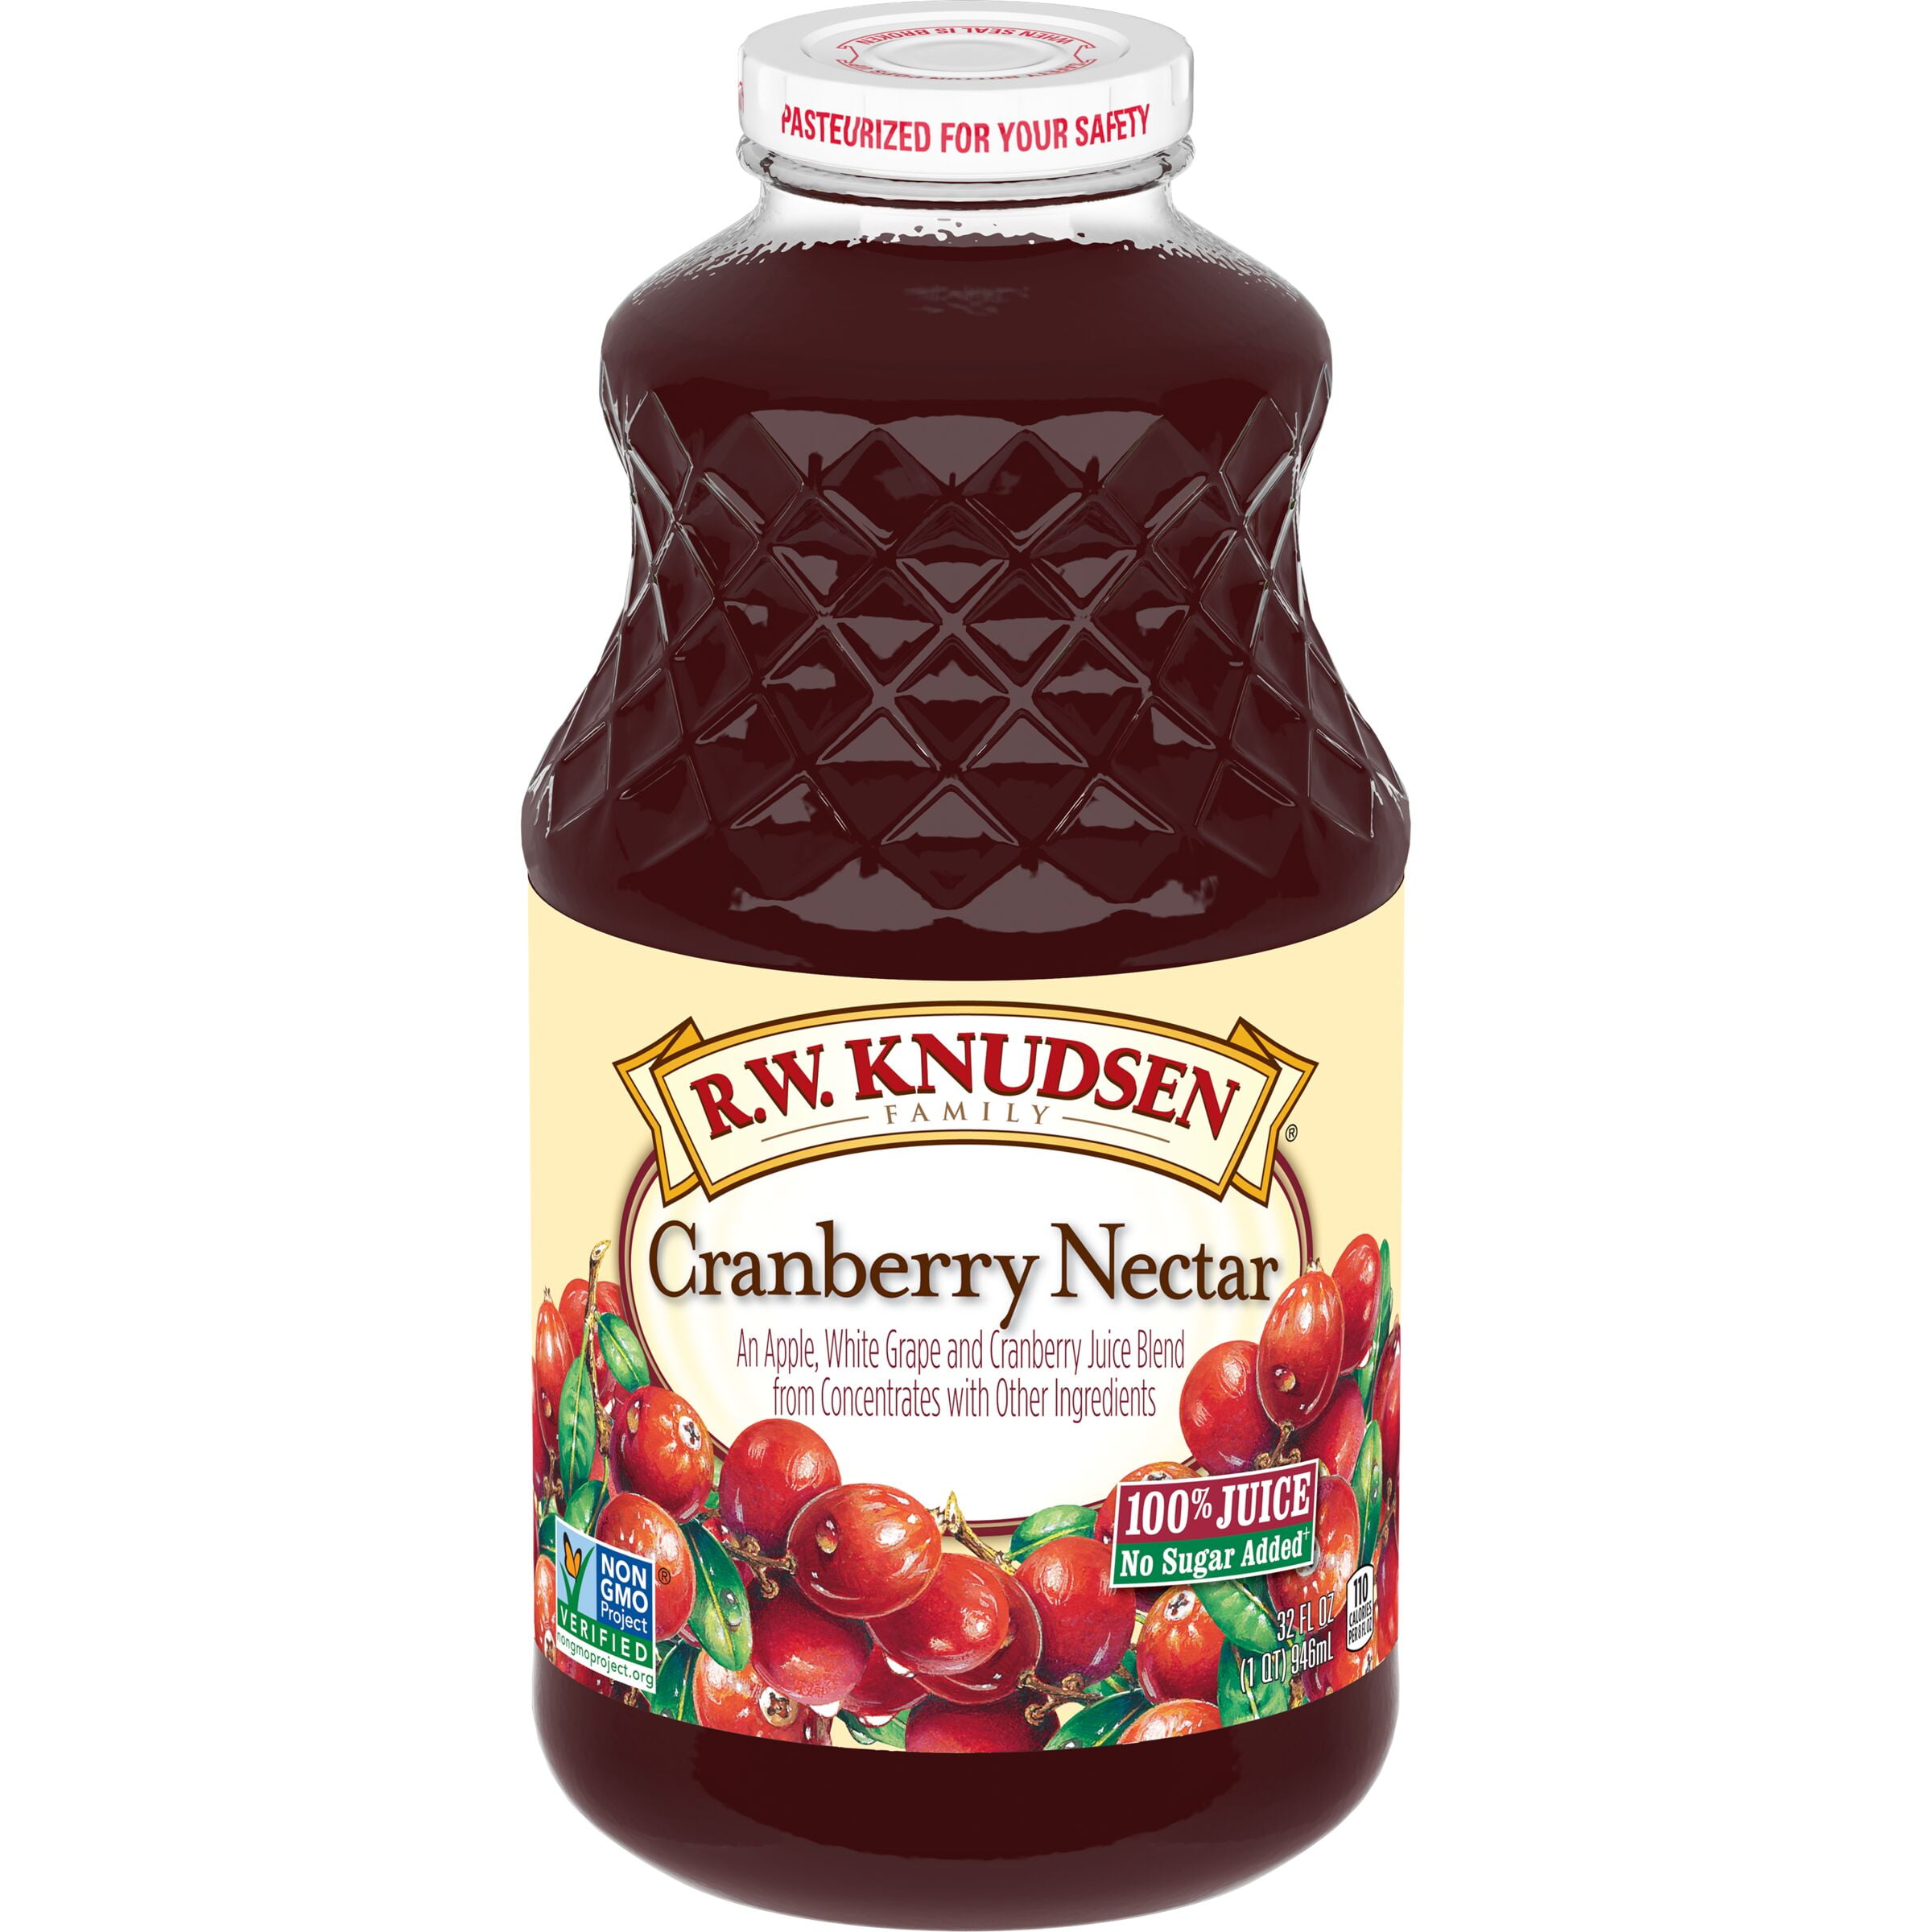 R.W. Knudsen Family Cranberry Nectar Juice, 32-Fluid Ounce - Walmart.com